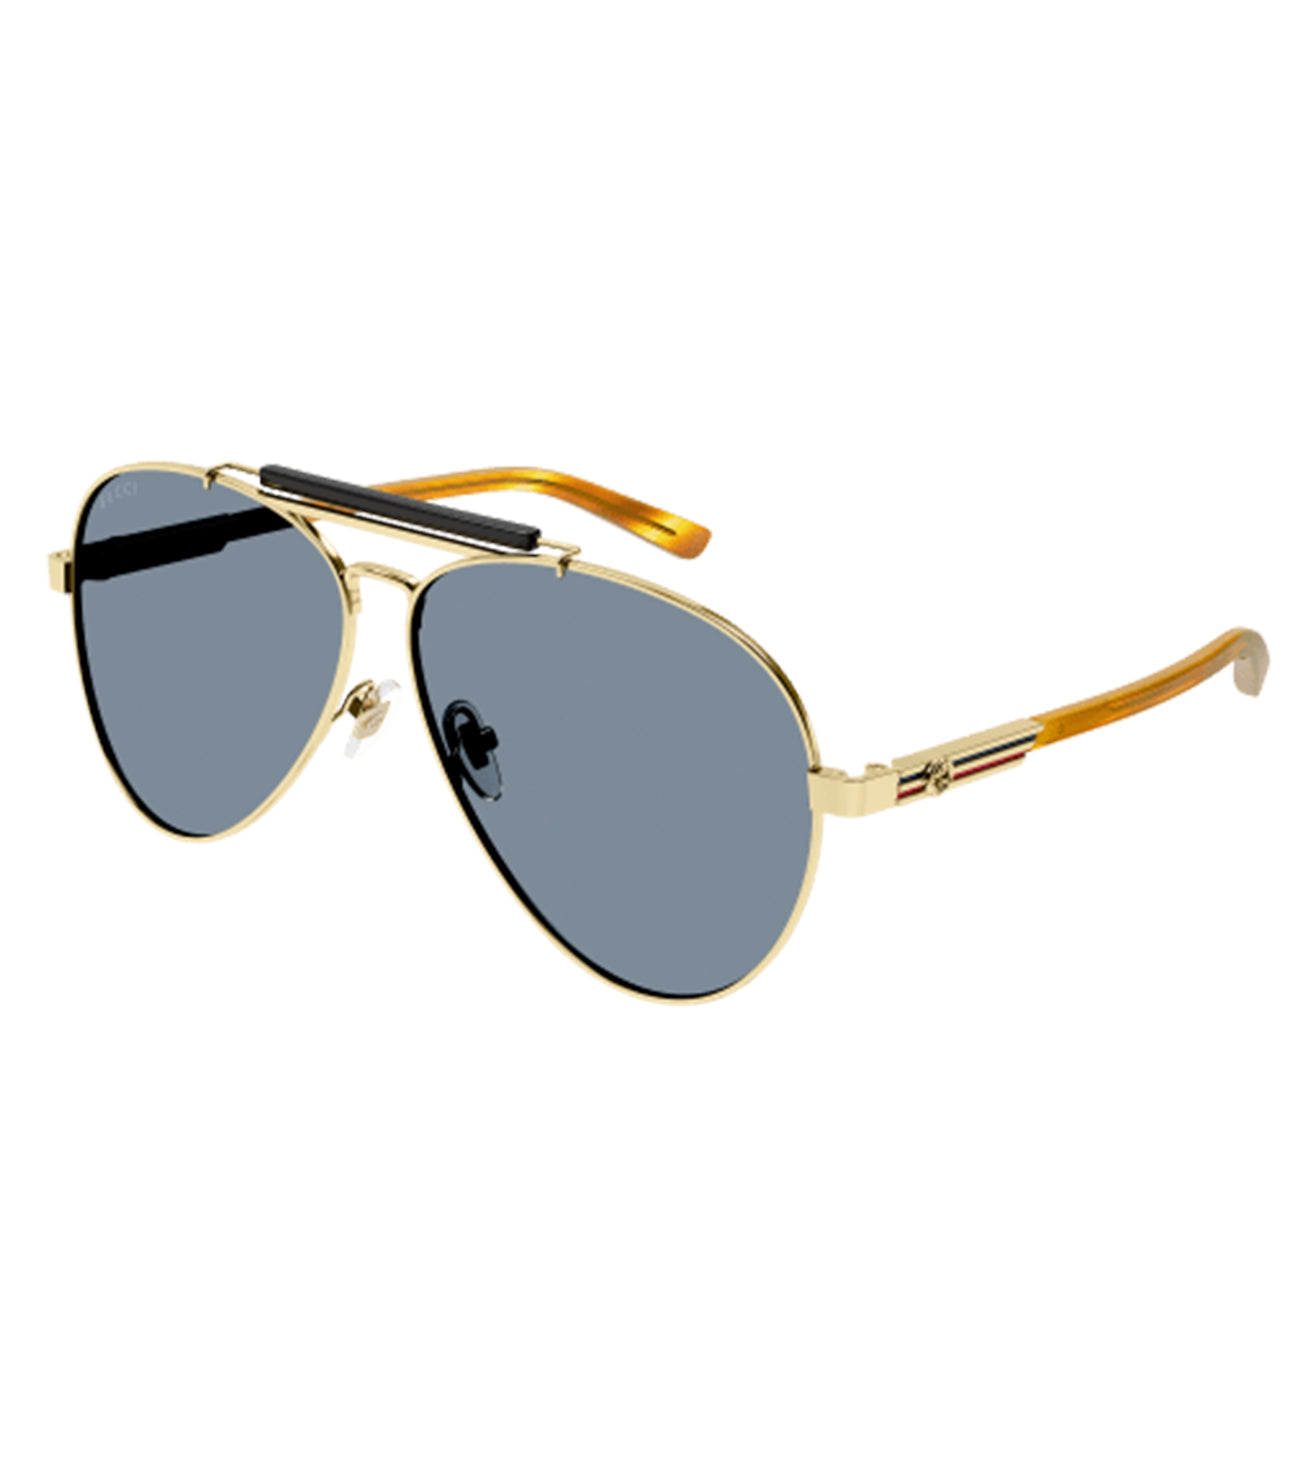 Gucci Men's Grey Aviator Sunglasses